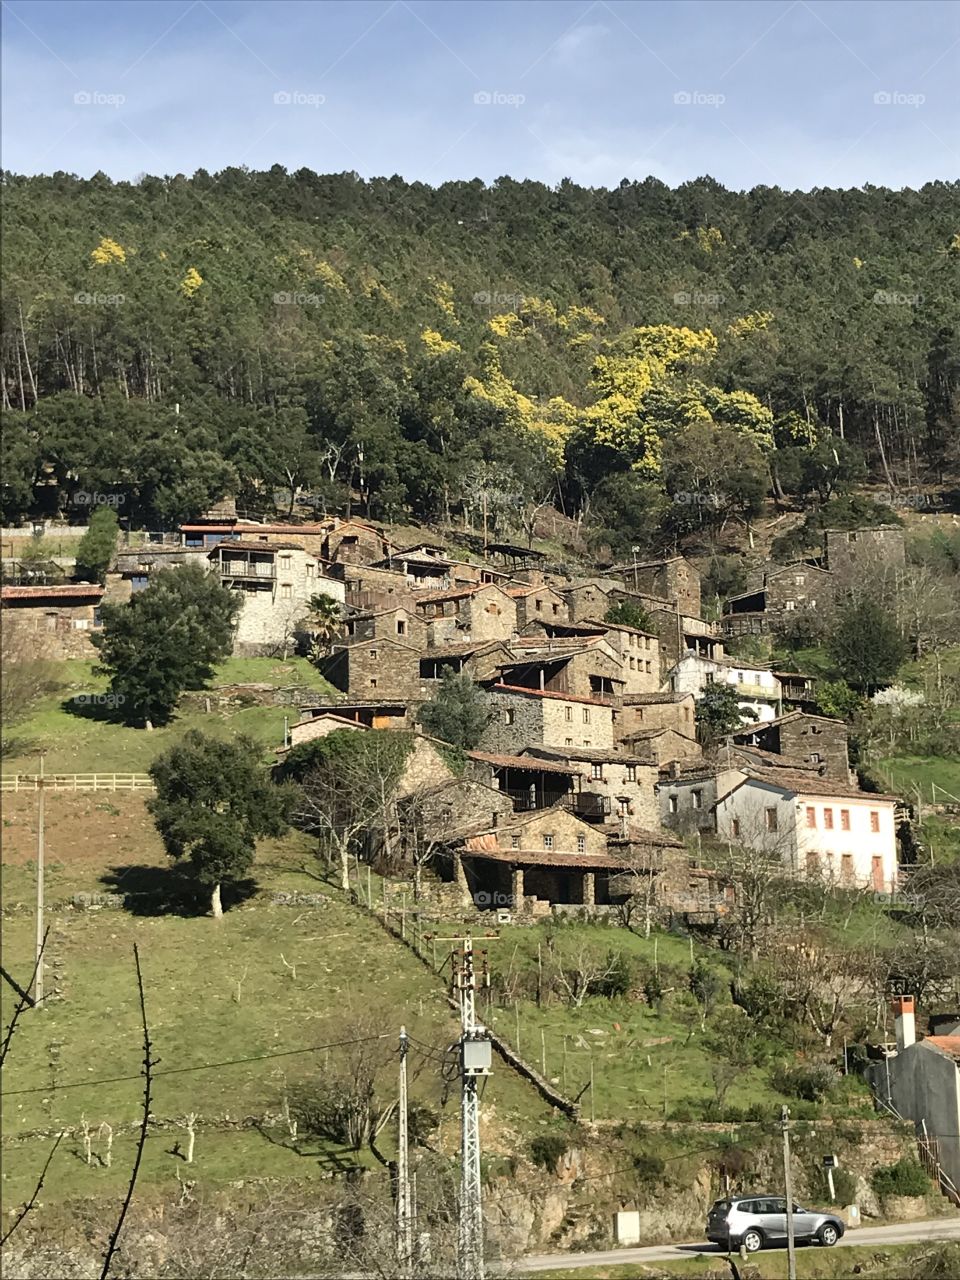 Candal, aldeias de xisto, Portugal 🇵🇹